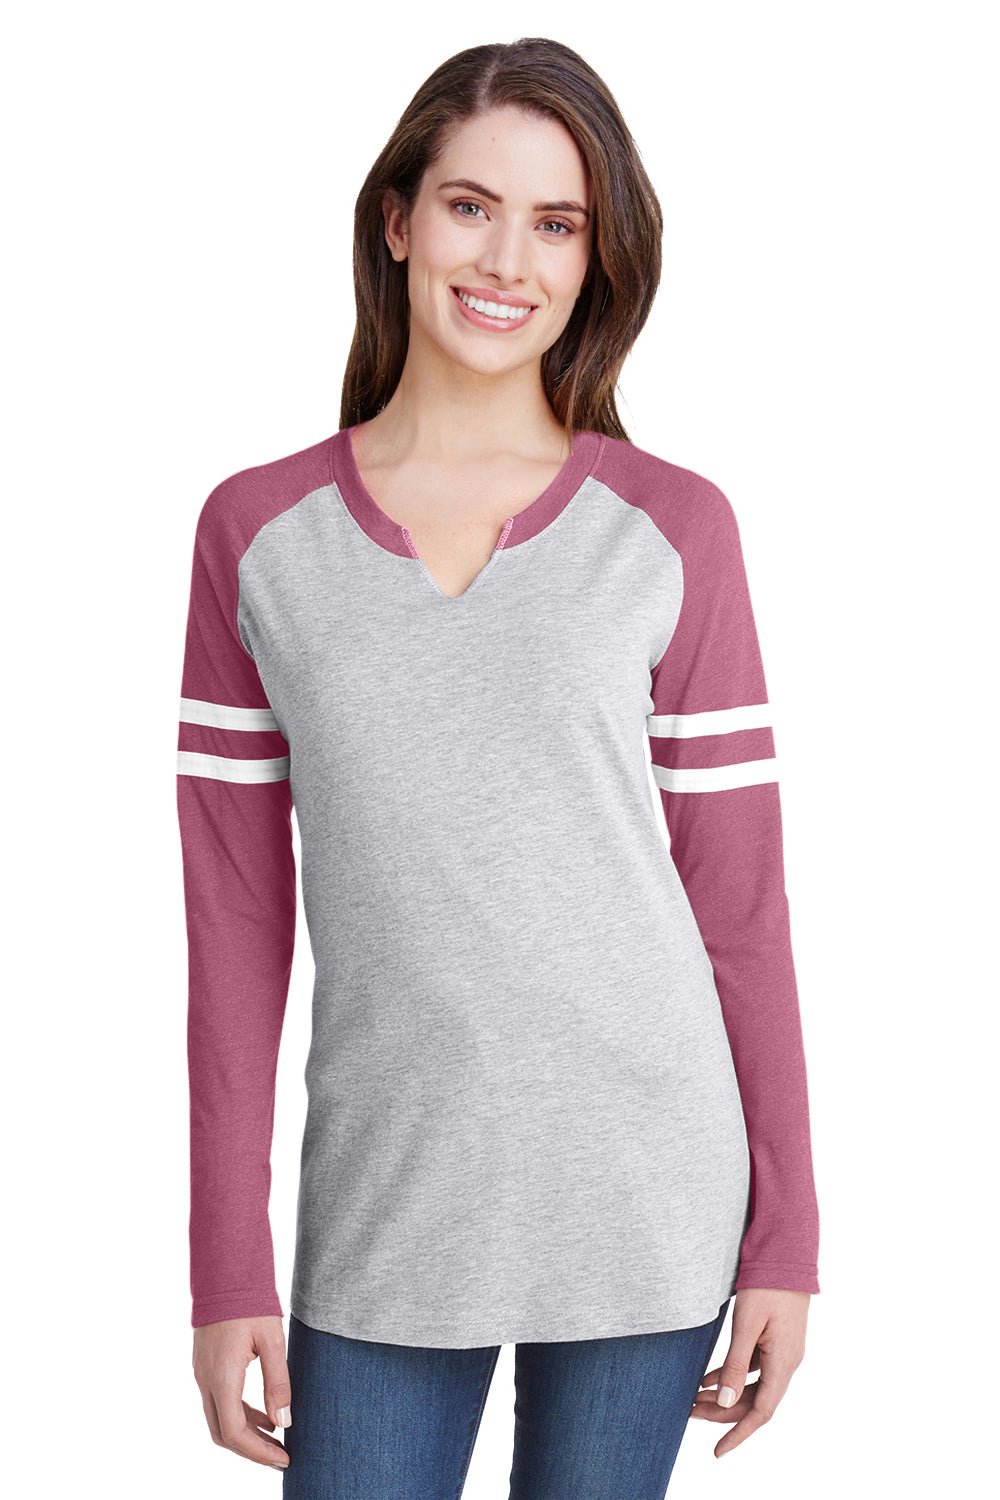 LAT 3534 Womens Gameday Mash Up Fine Jersey Long Sleeve V-Neck T-Shirt Heather Grey/Burgundy Front